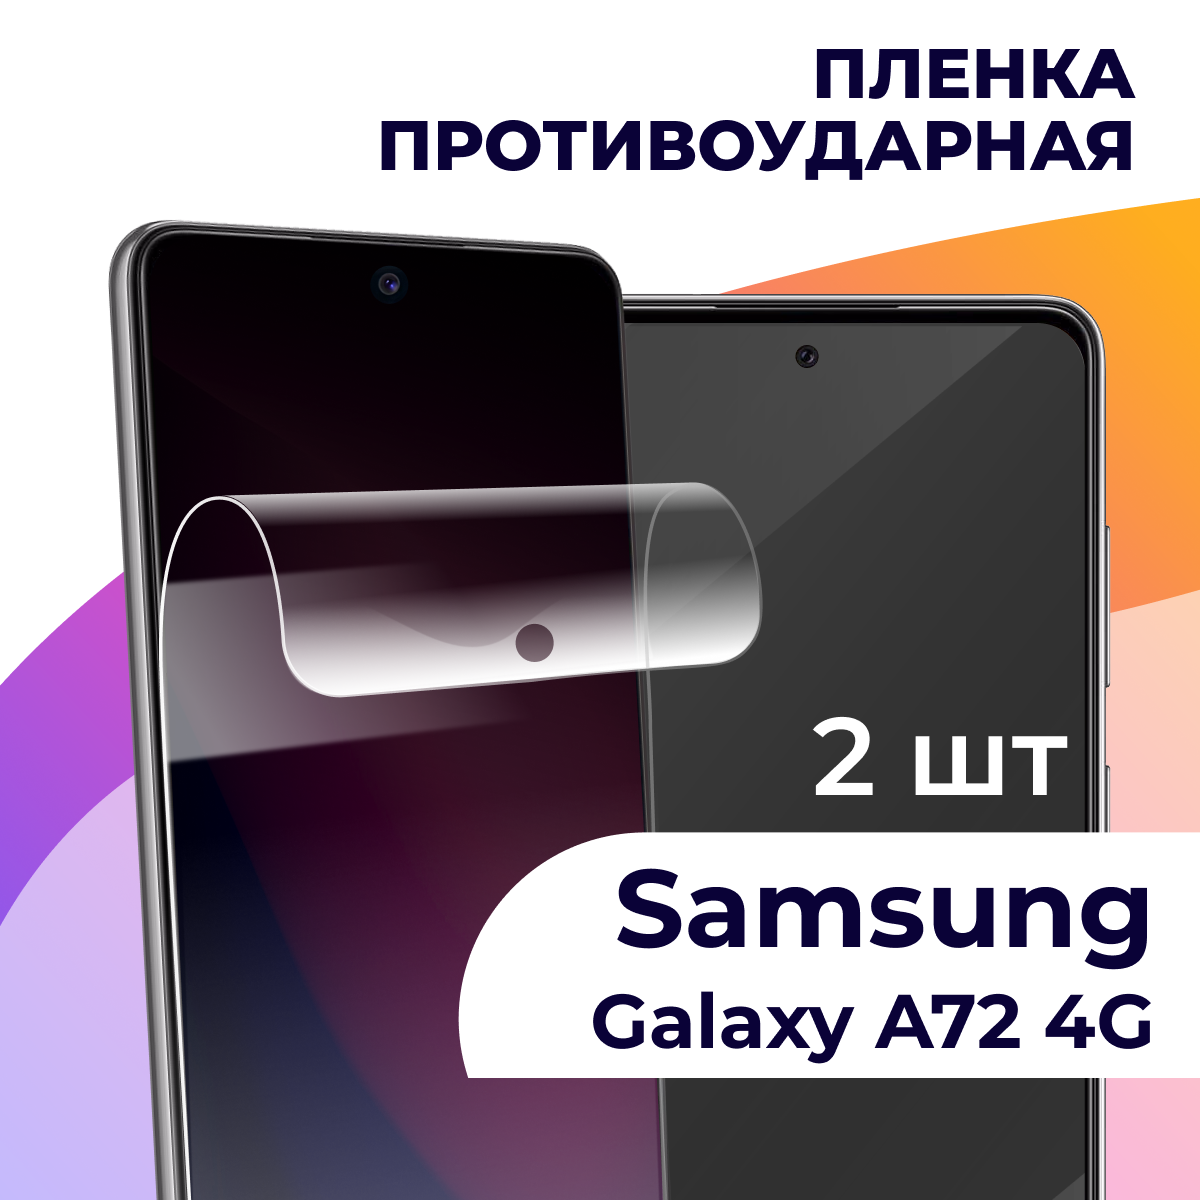 Комплект 2 шт. Гидрогелевая пленка для смартфона Samsung Galaxy A72 4G / Противоударная пленка на телефон Самсунг Галакси А72 4Г / Защитная пленка